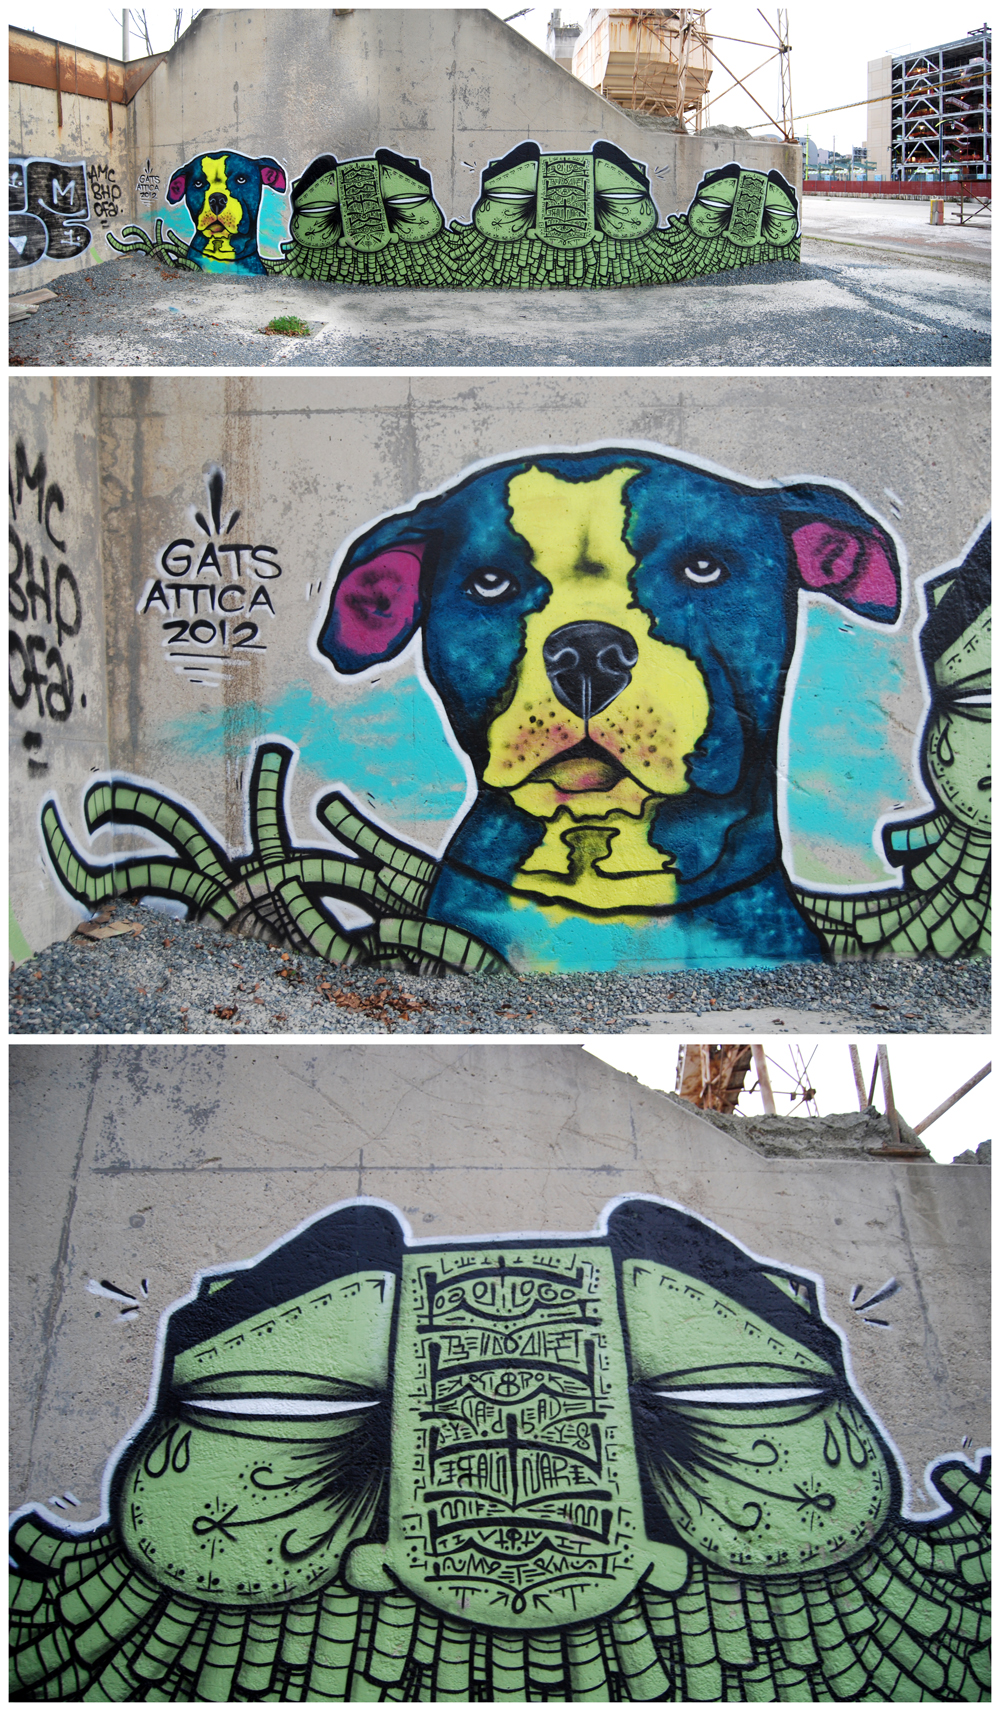 Attica GATS Graffiti Piece San Francisco CA. 